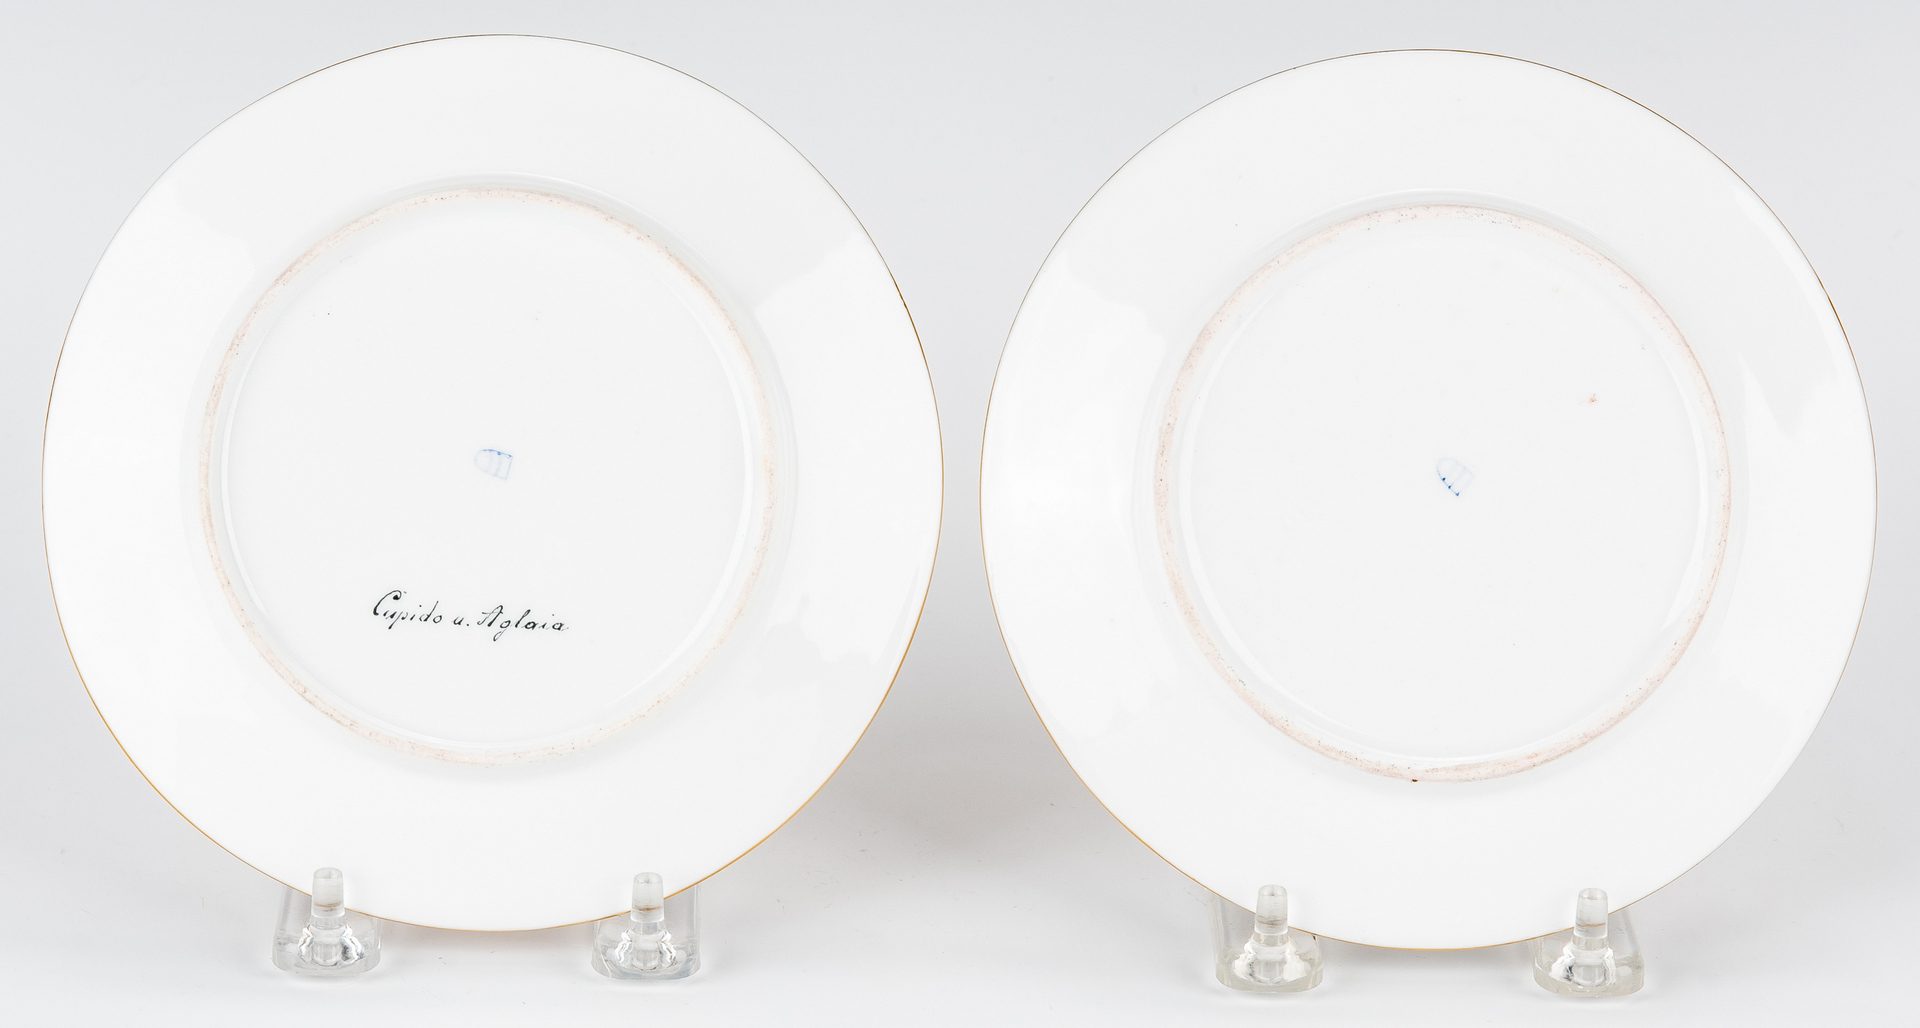 Lot 227: Pr. Royal Vienna Cabinet Plates, signed Bauer